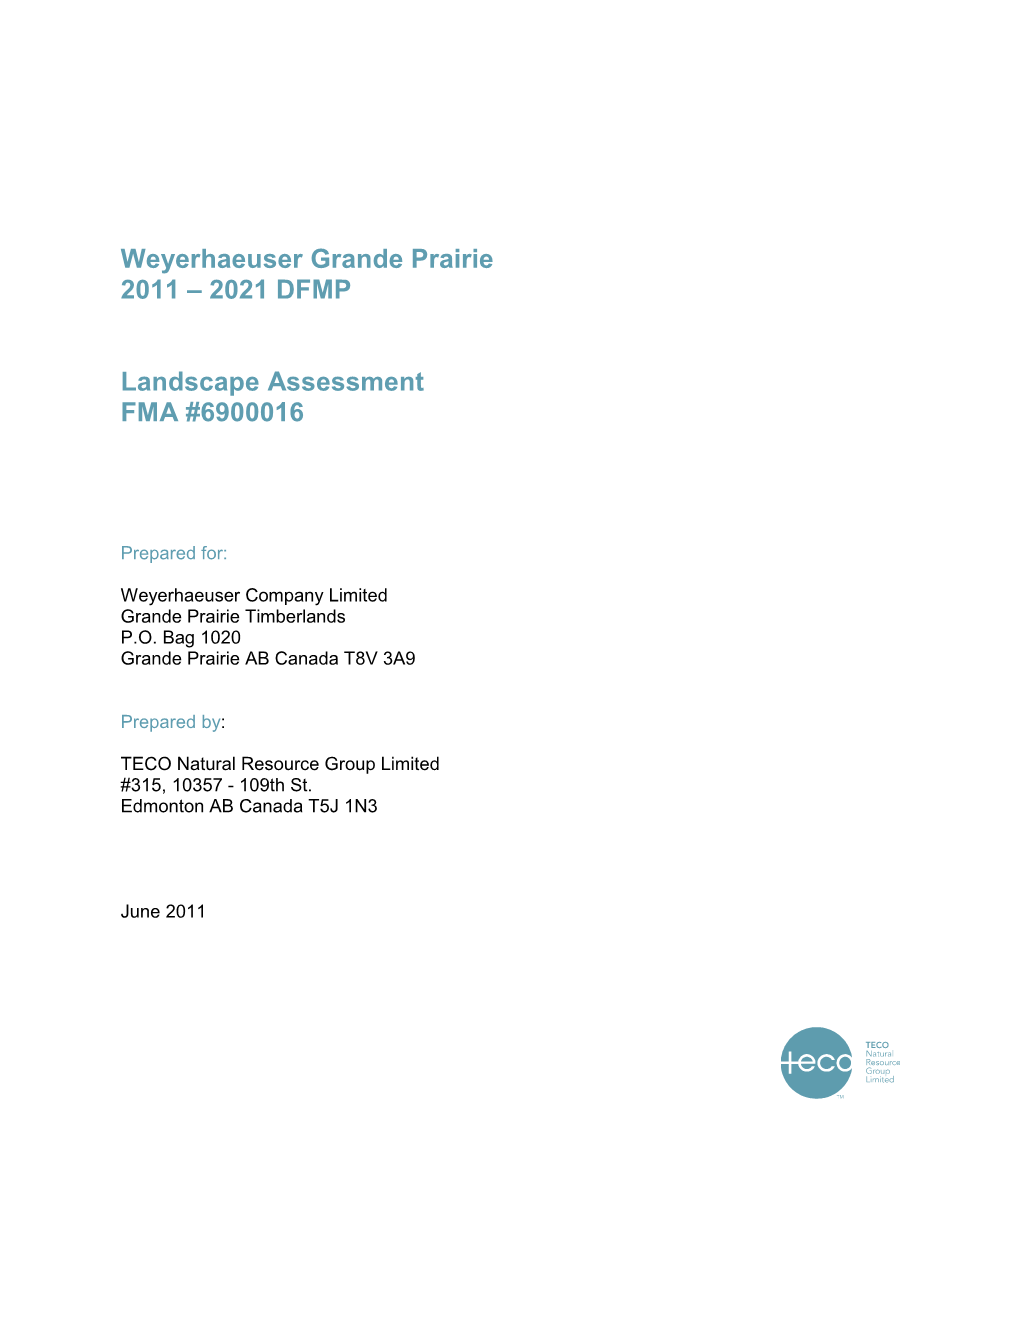 WGP Landscape Assessment